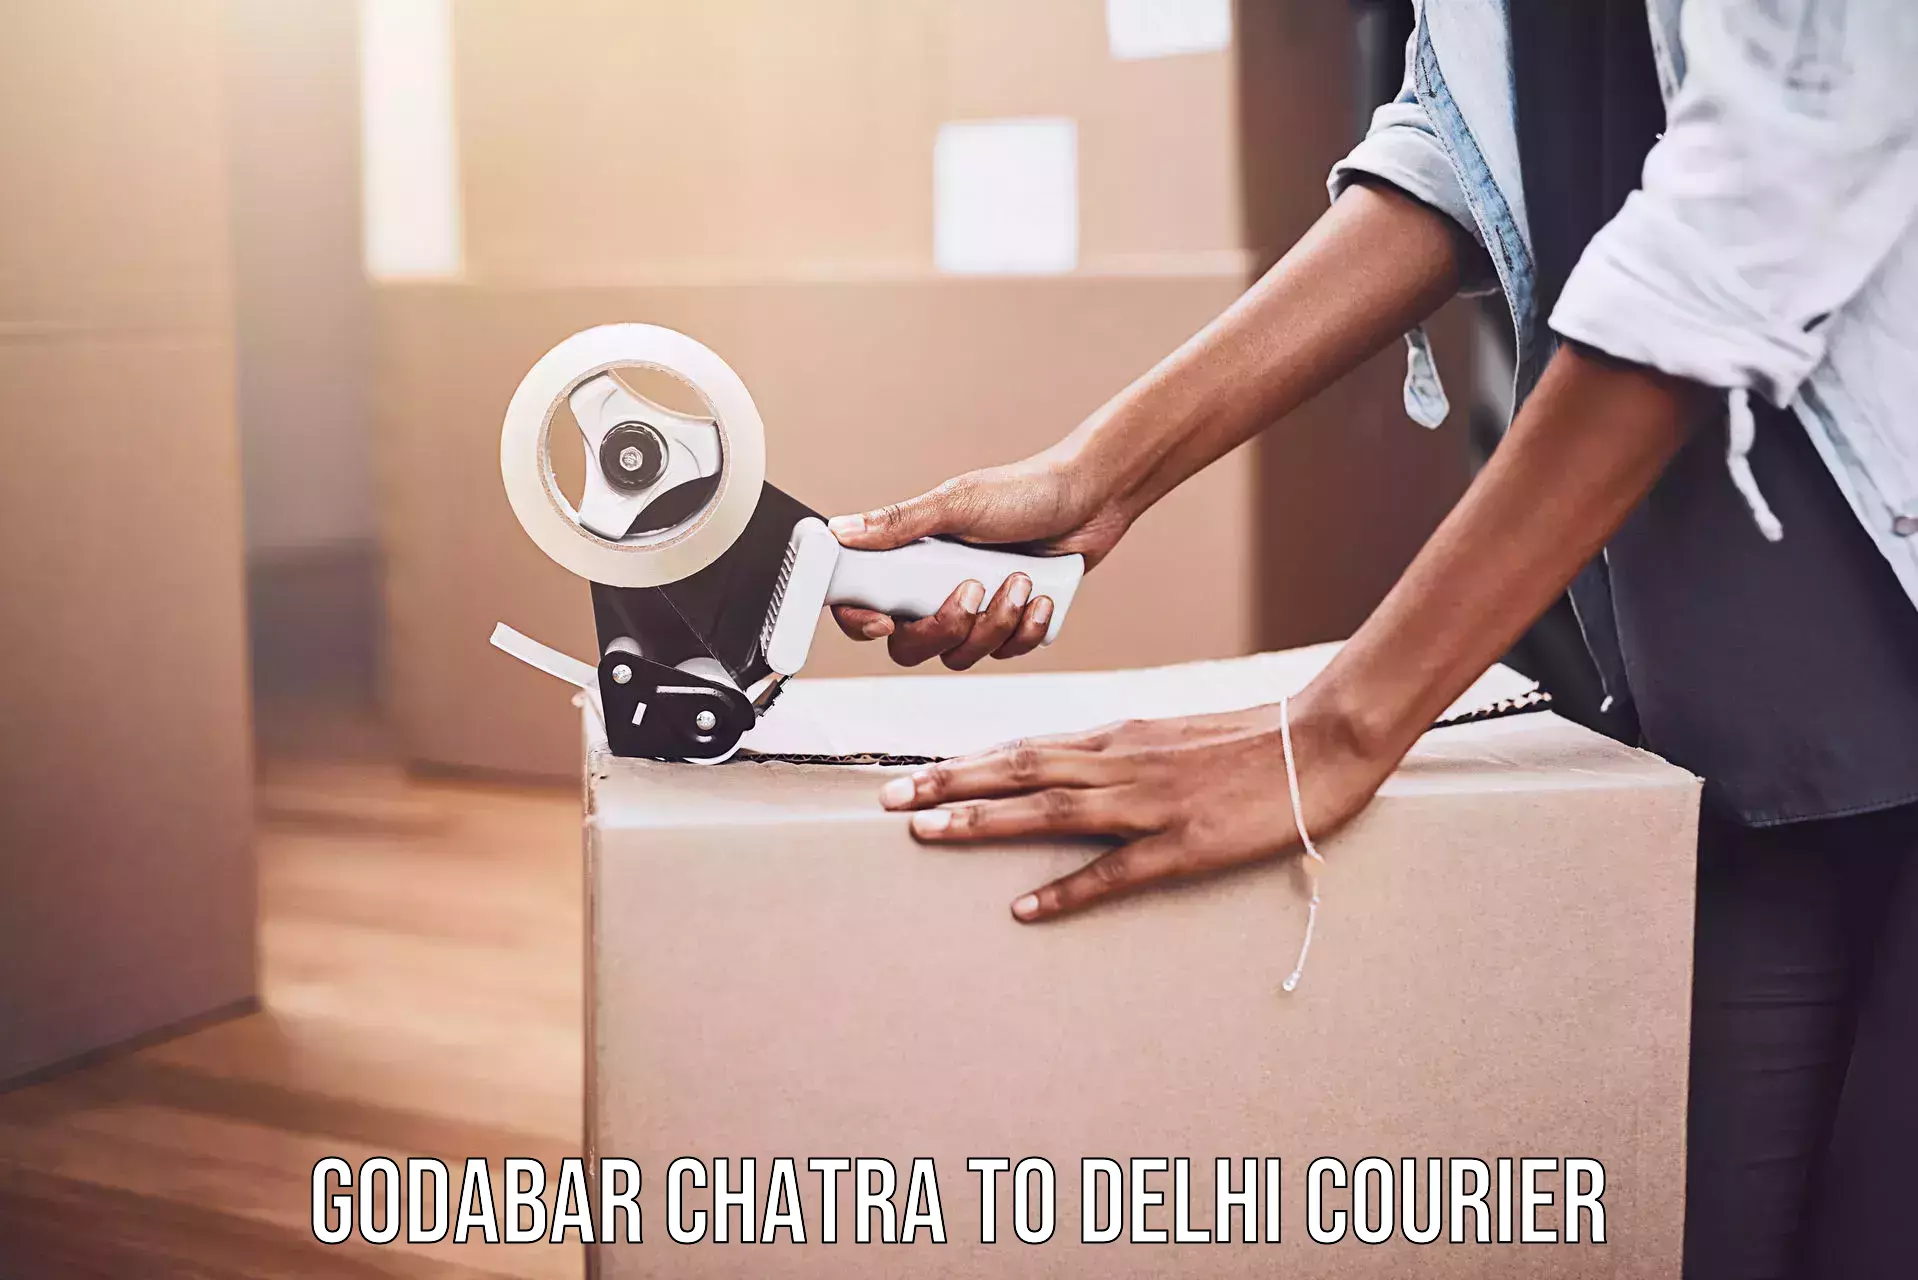 Courier service innovation Godabar Chatra to NCR